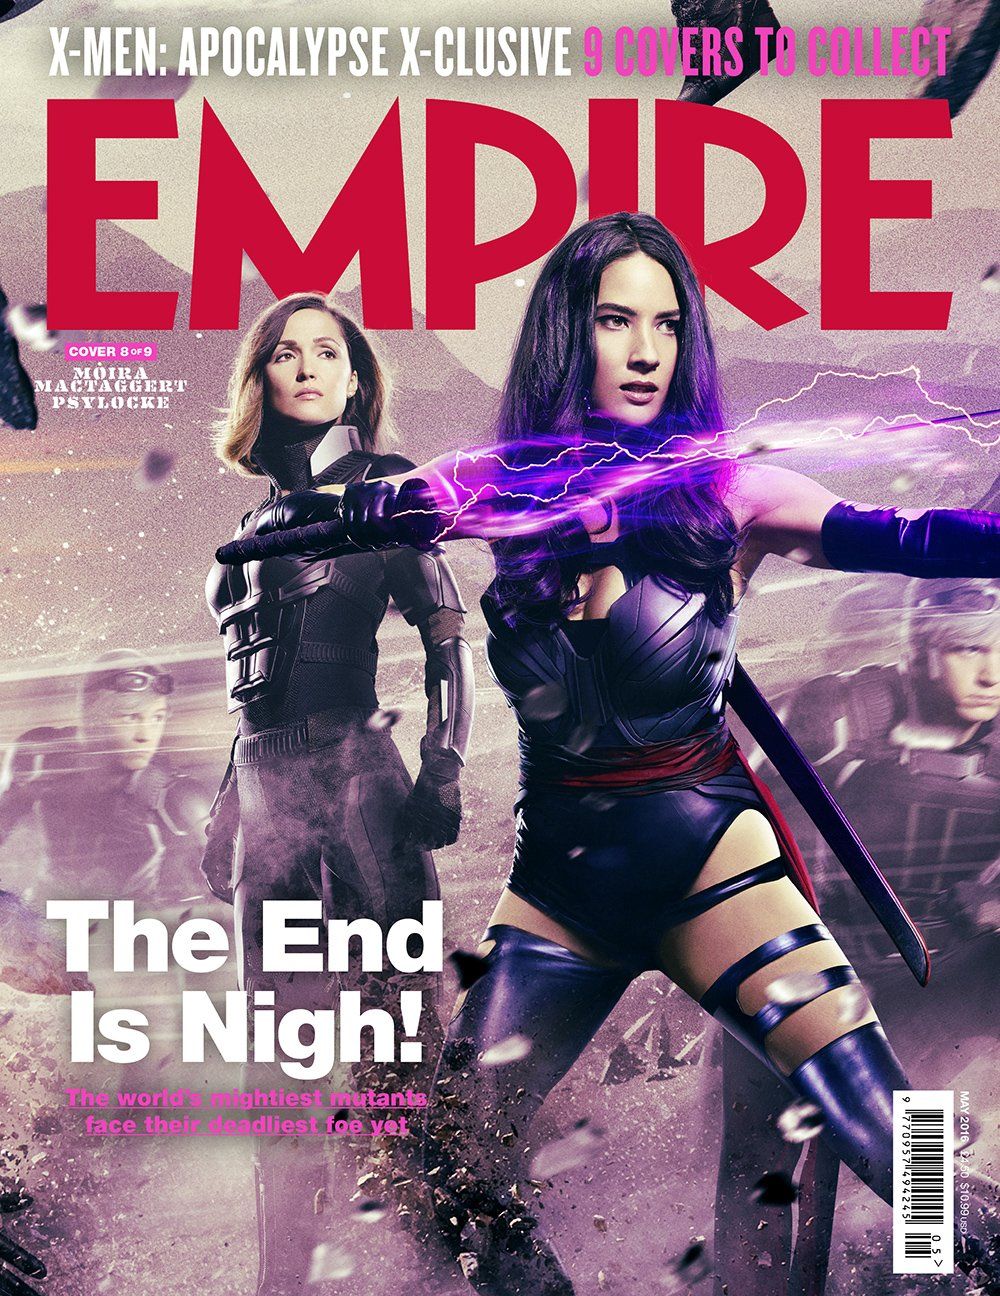 X-men: Apocalypse magazine cover - Psylocke and Moira